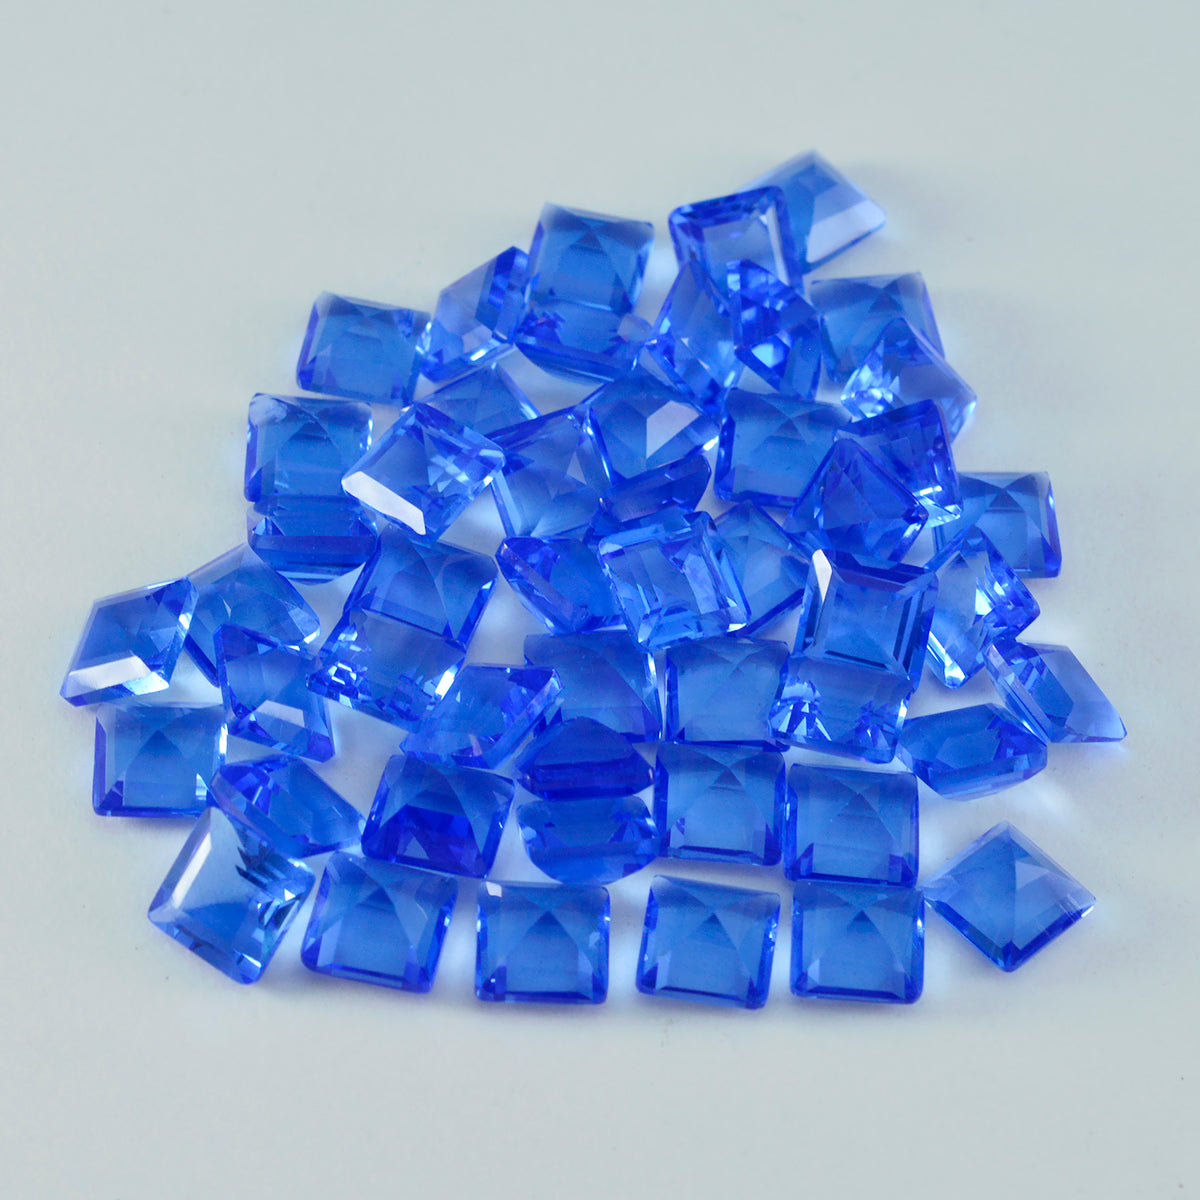 Riyogems 1PC Blue Sapphire CZ Faceted 7x7 mm Square Shape beautiful Quality Gems